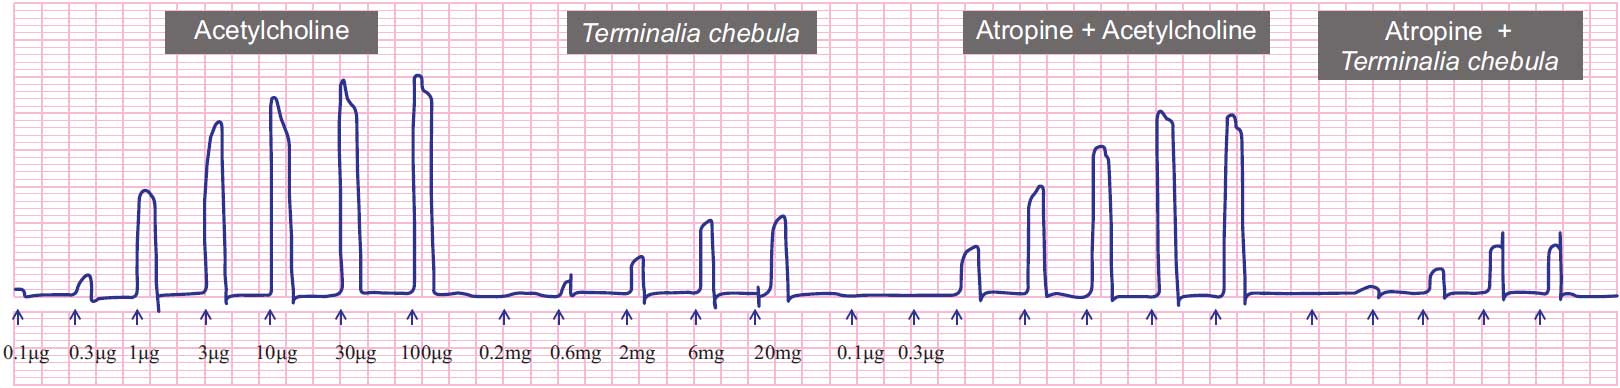 Image for - Gut Stimulatory Effect of Terminalia chebula in Experimental Animal Models